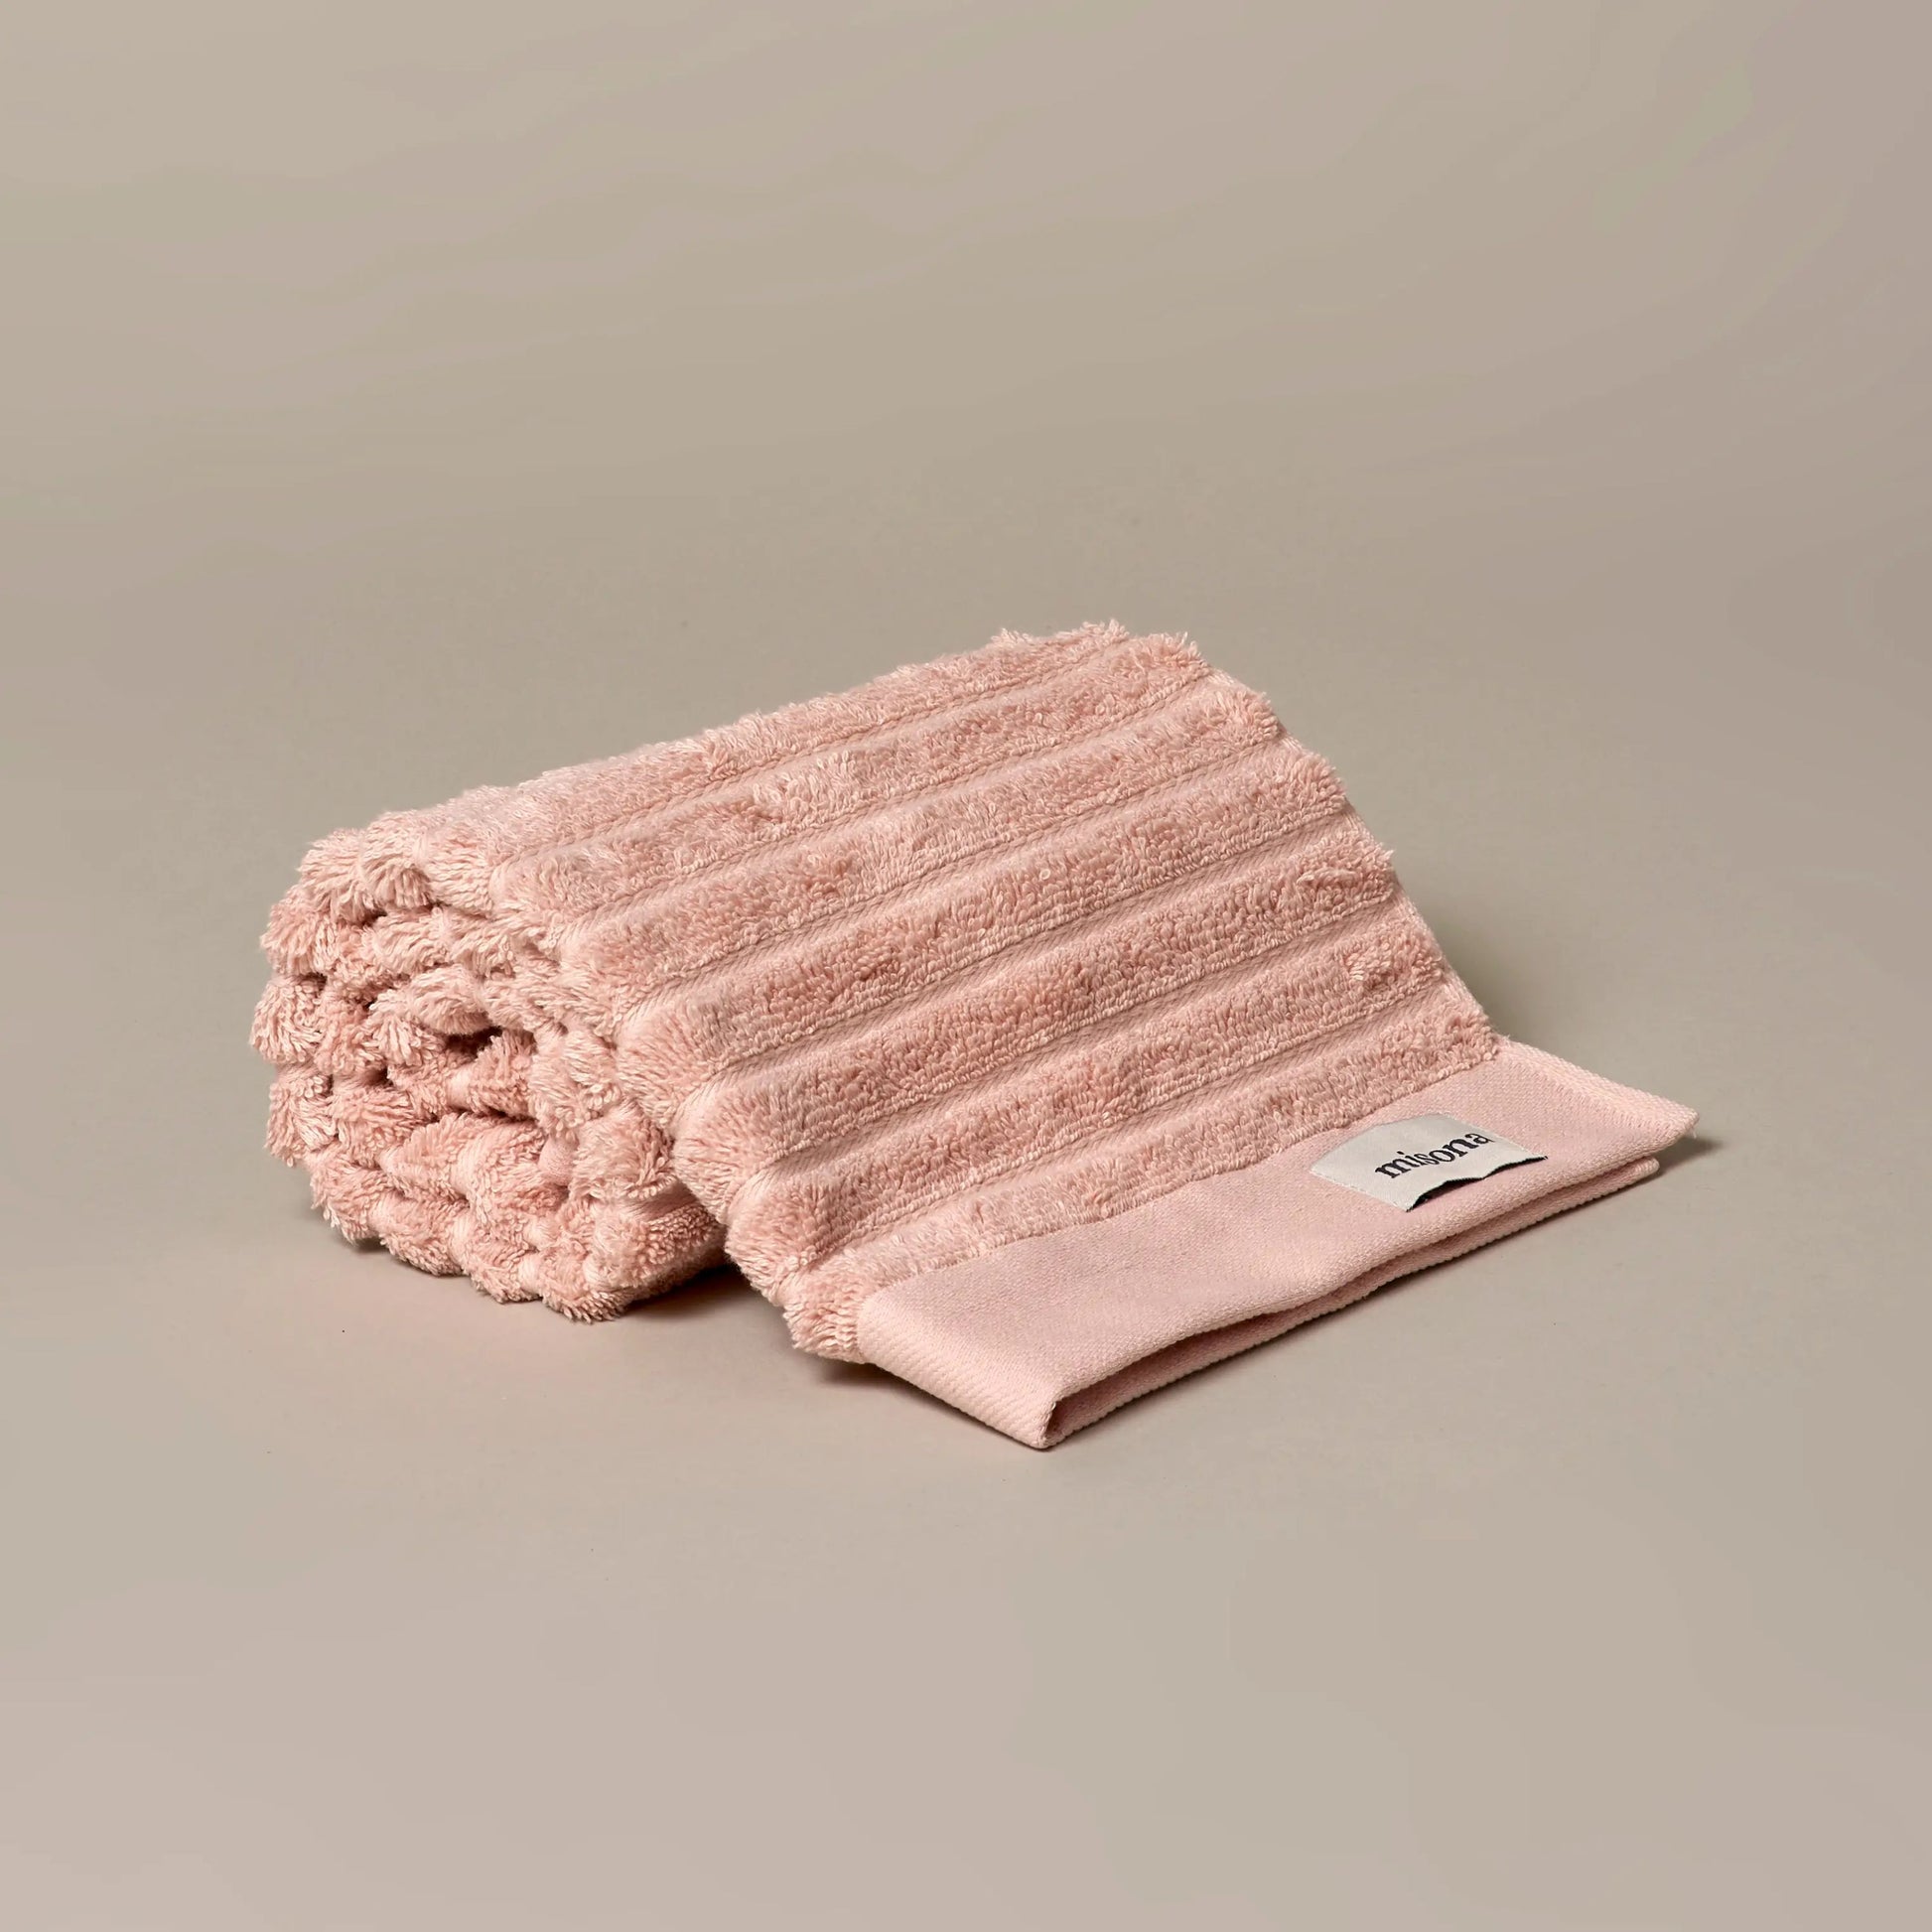 Misona Ribbed Organic Cotton Hand Towel - Blush Pink - Hand Towels - Misona - Bliss Bathroom Supplies -